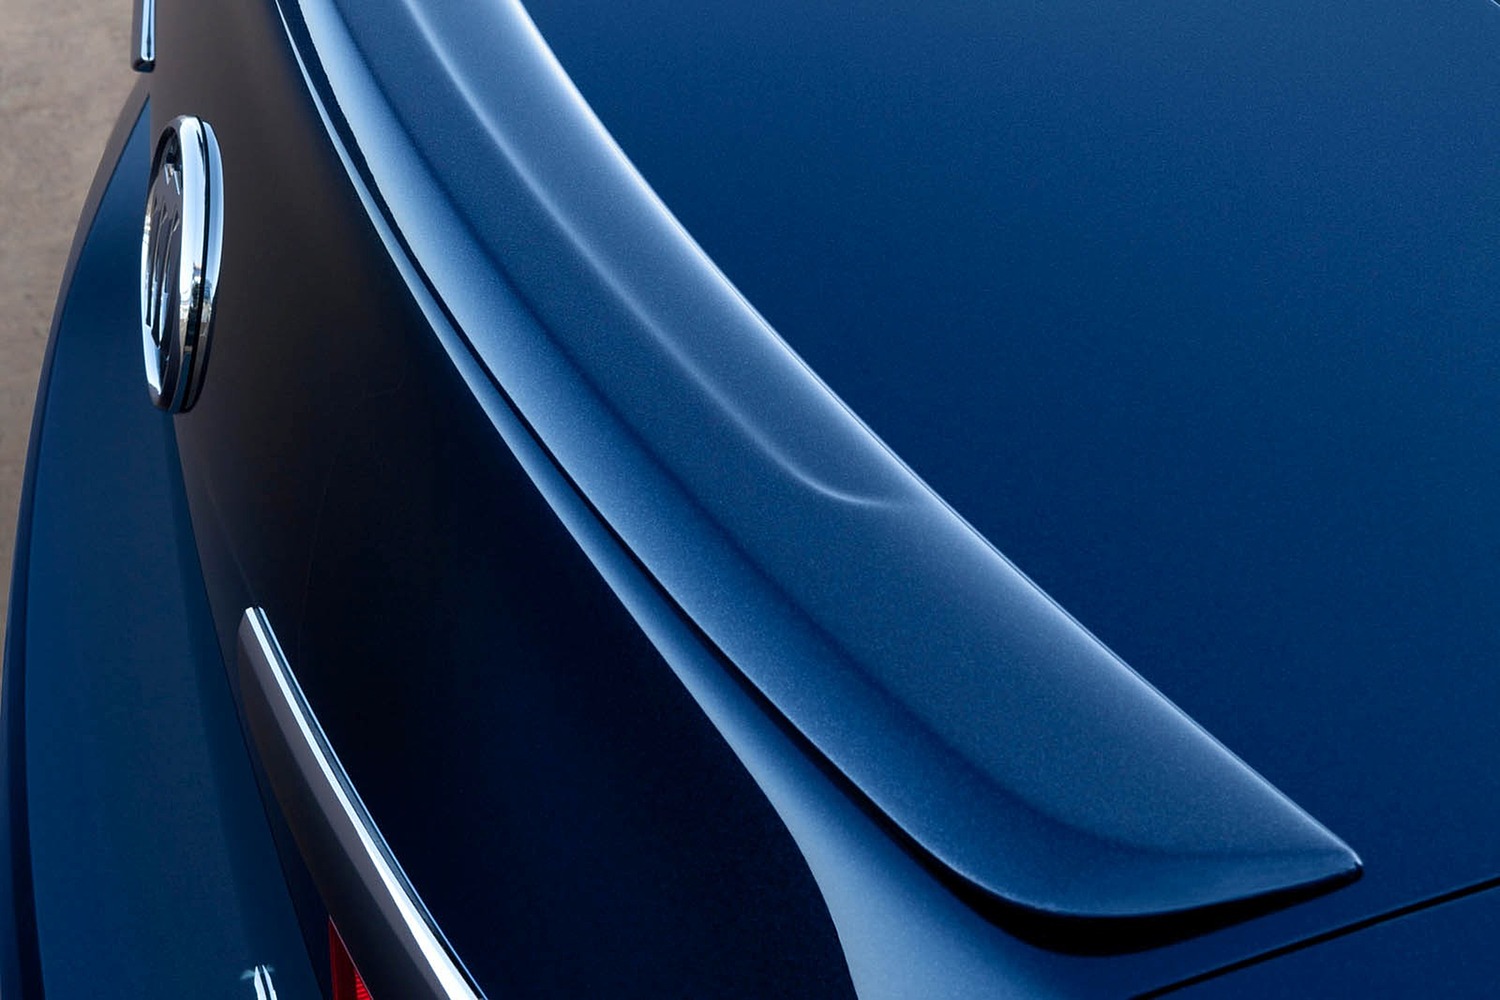 Buick Verano Premium Turbo Group Sedan Exterior Detail (2015 model year shown)